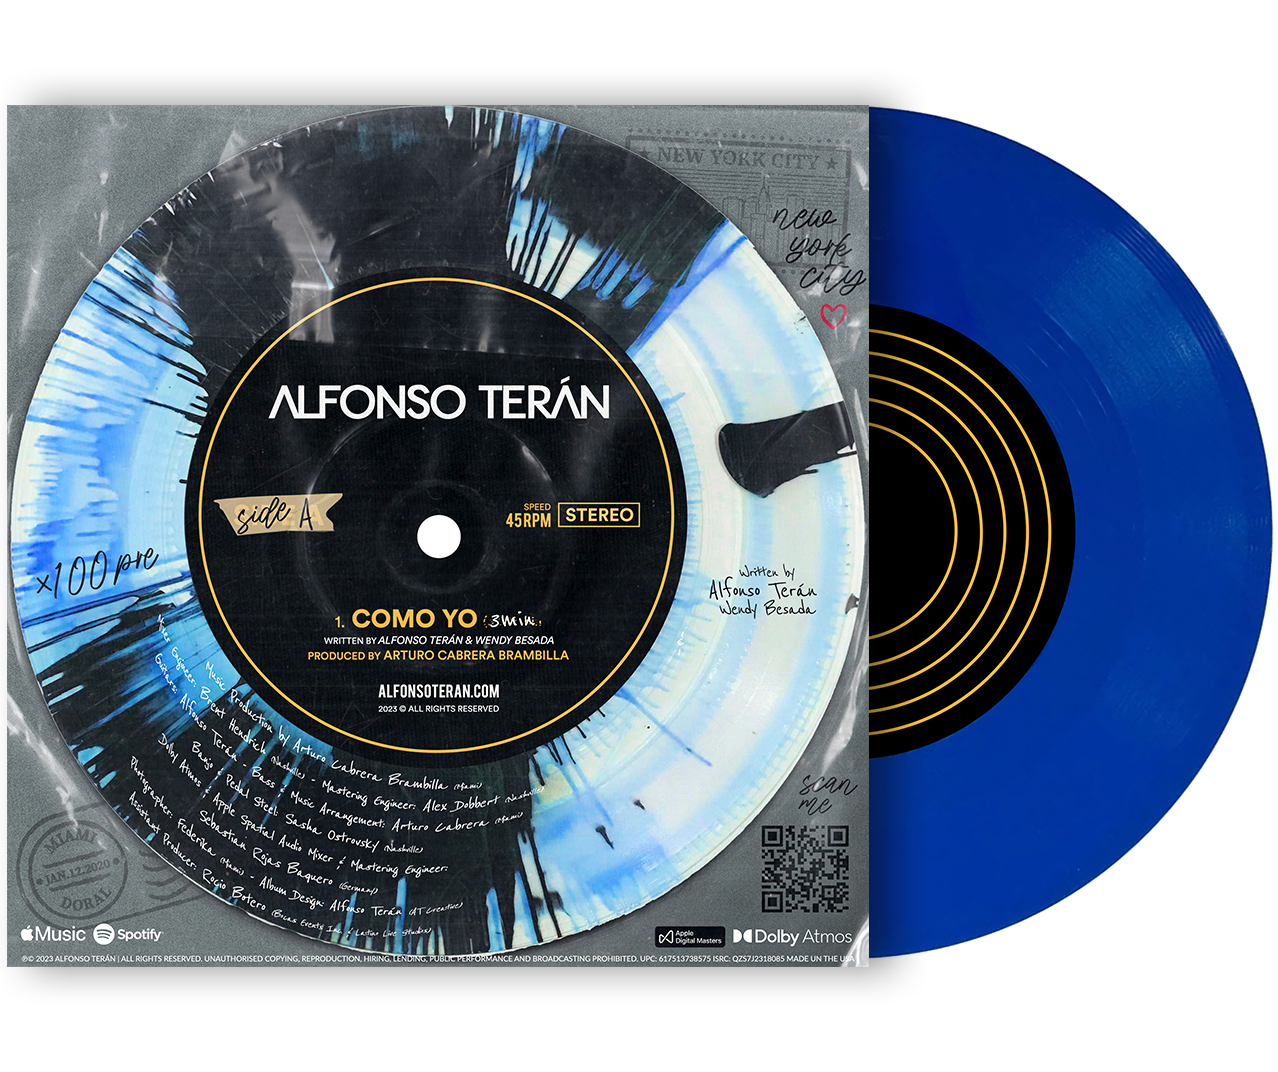 Limited Edition Transparent "Ocean Blue" Como Yo 7 inch Vinyl Record